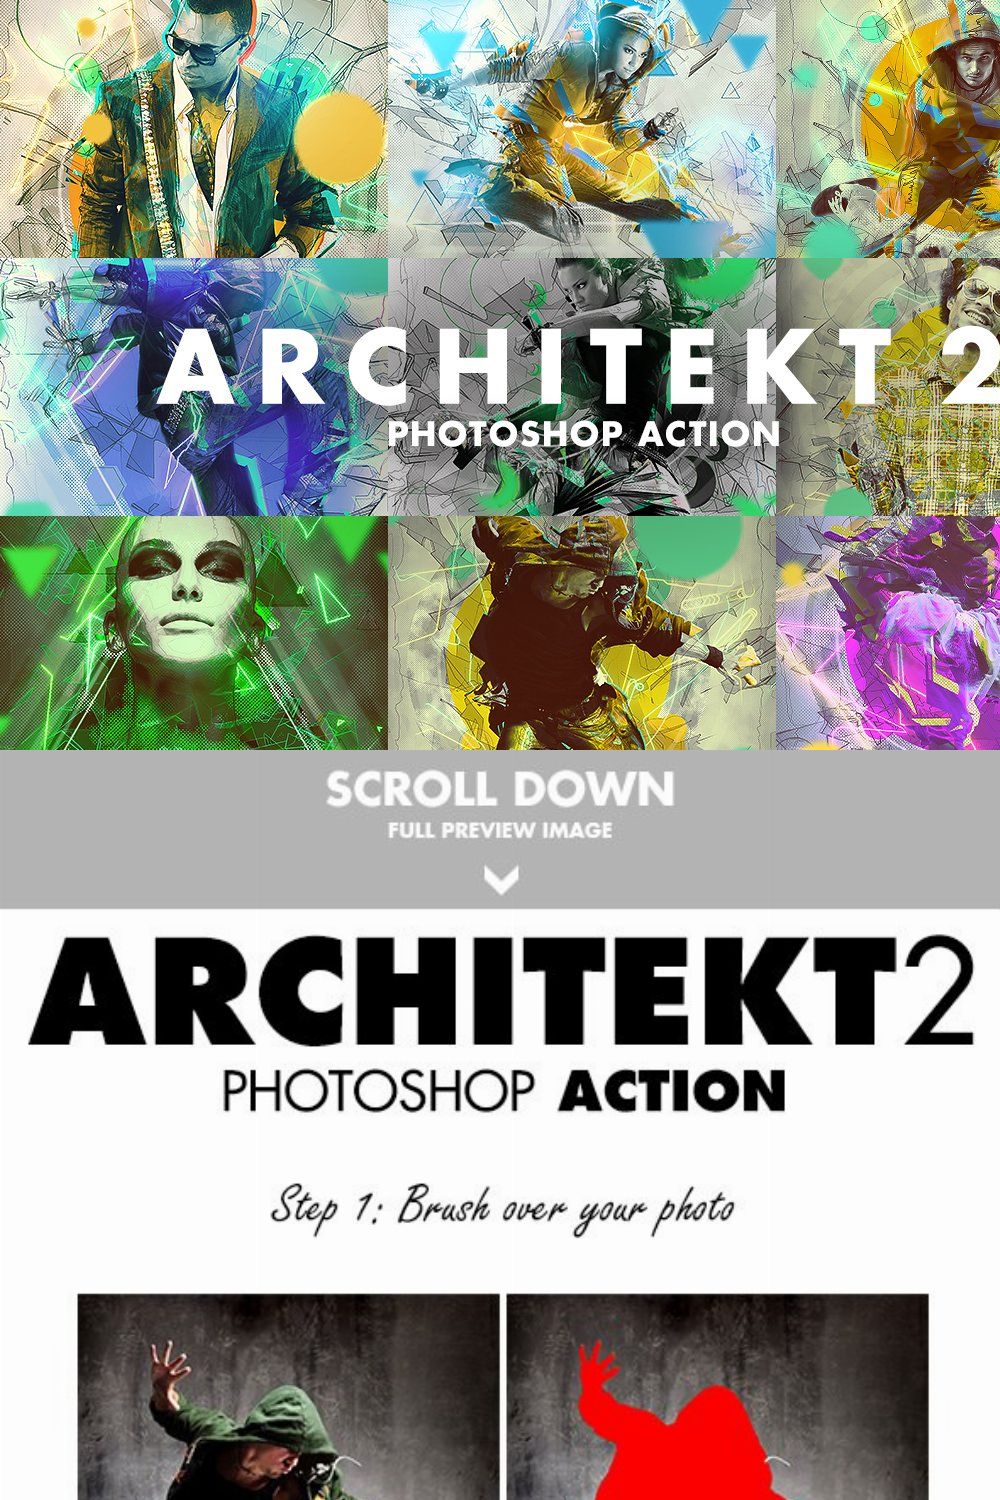 Architekt 2 Photoshop Action pinterest preview image.